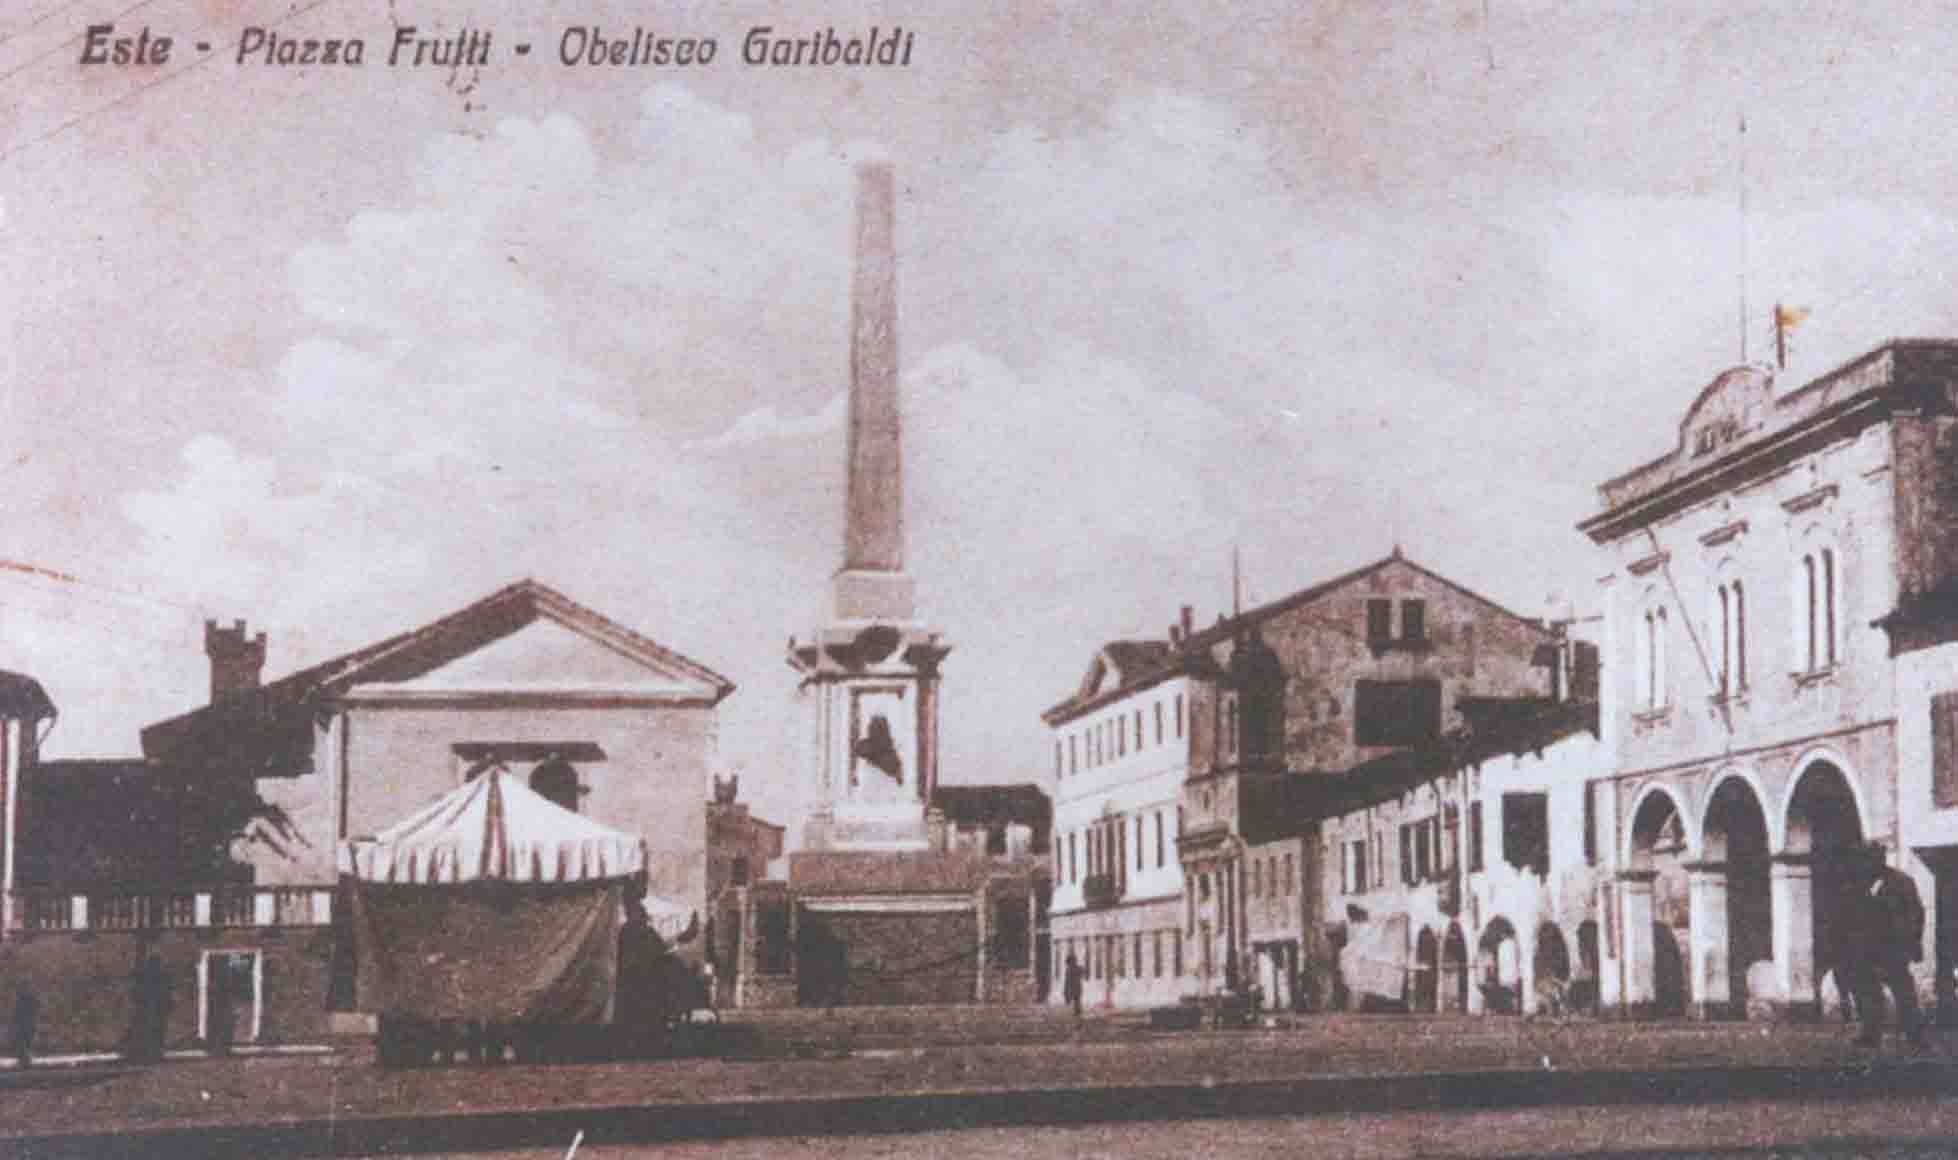 Piazza Frutti, 1920 @ Piazza Trento Piazza Trieste